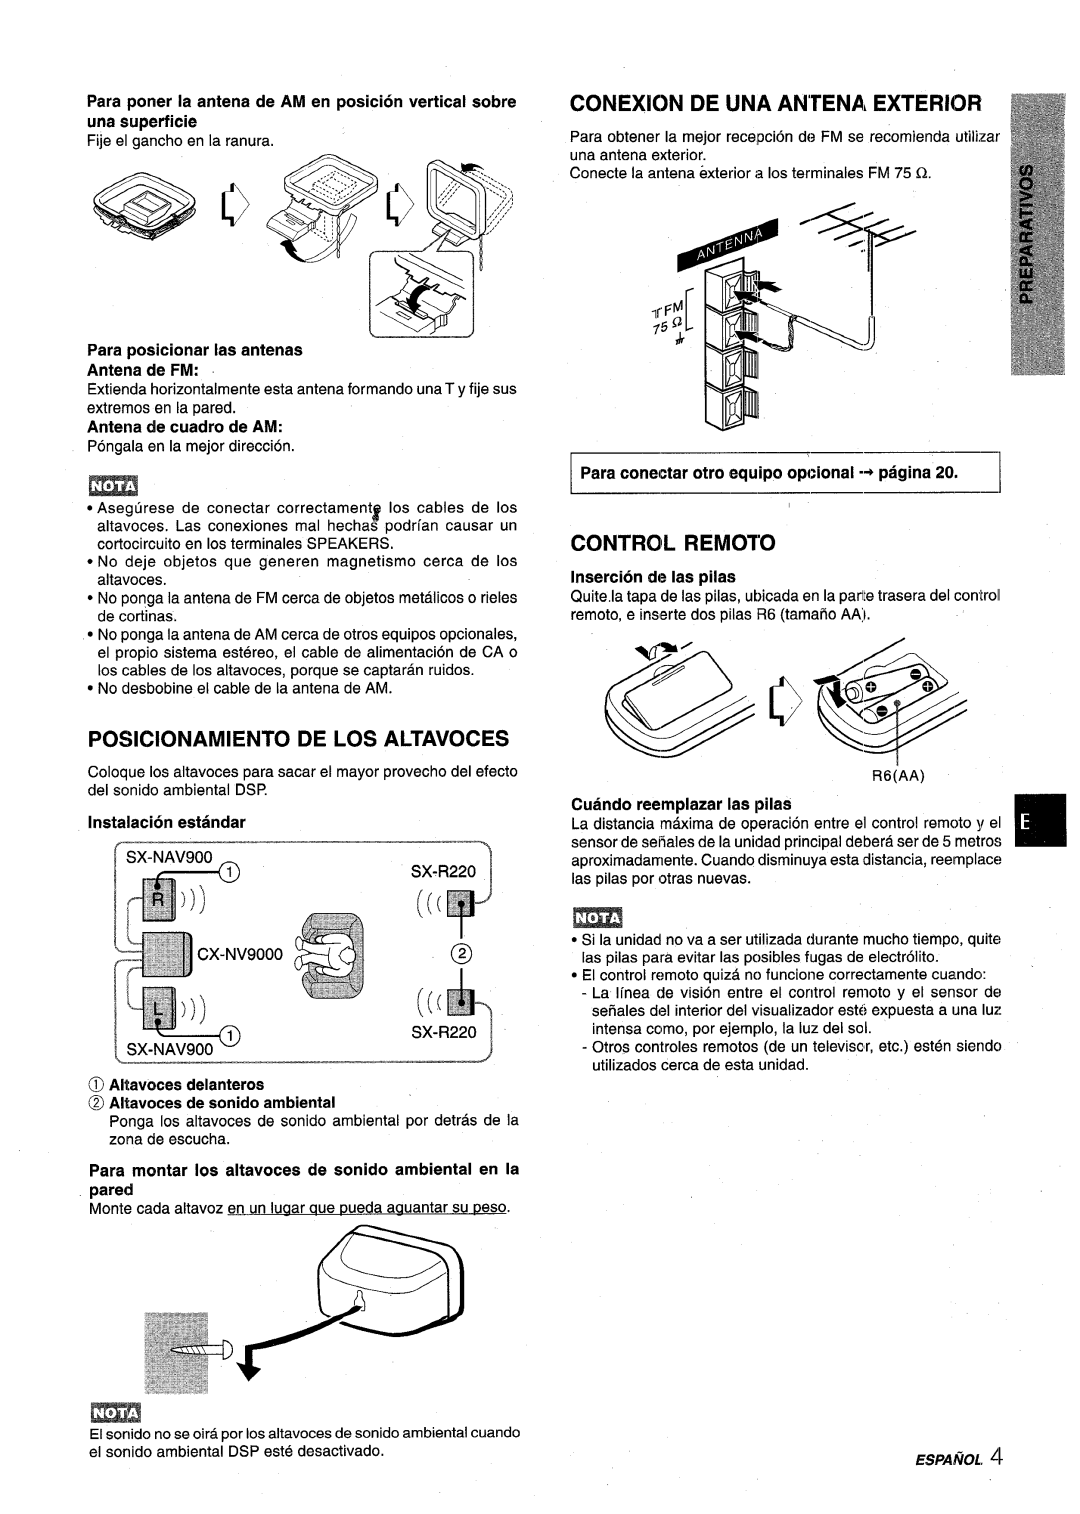 Aiwa NSX-V9000 manual LW -l, Conexicn De Una Antena, Exterior, Control Remoto, POSK30NAMIENT0 DE LOS ALTAVOCES 